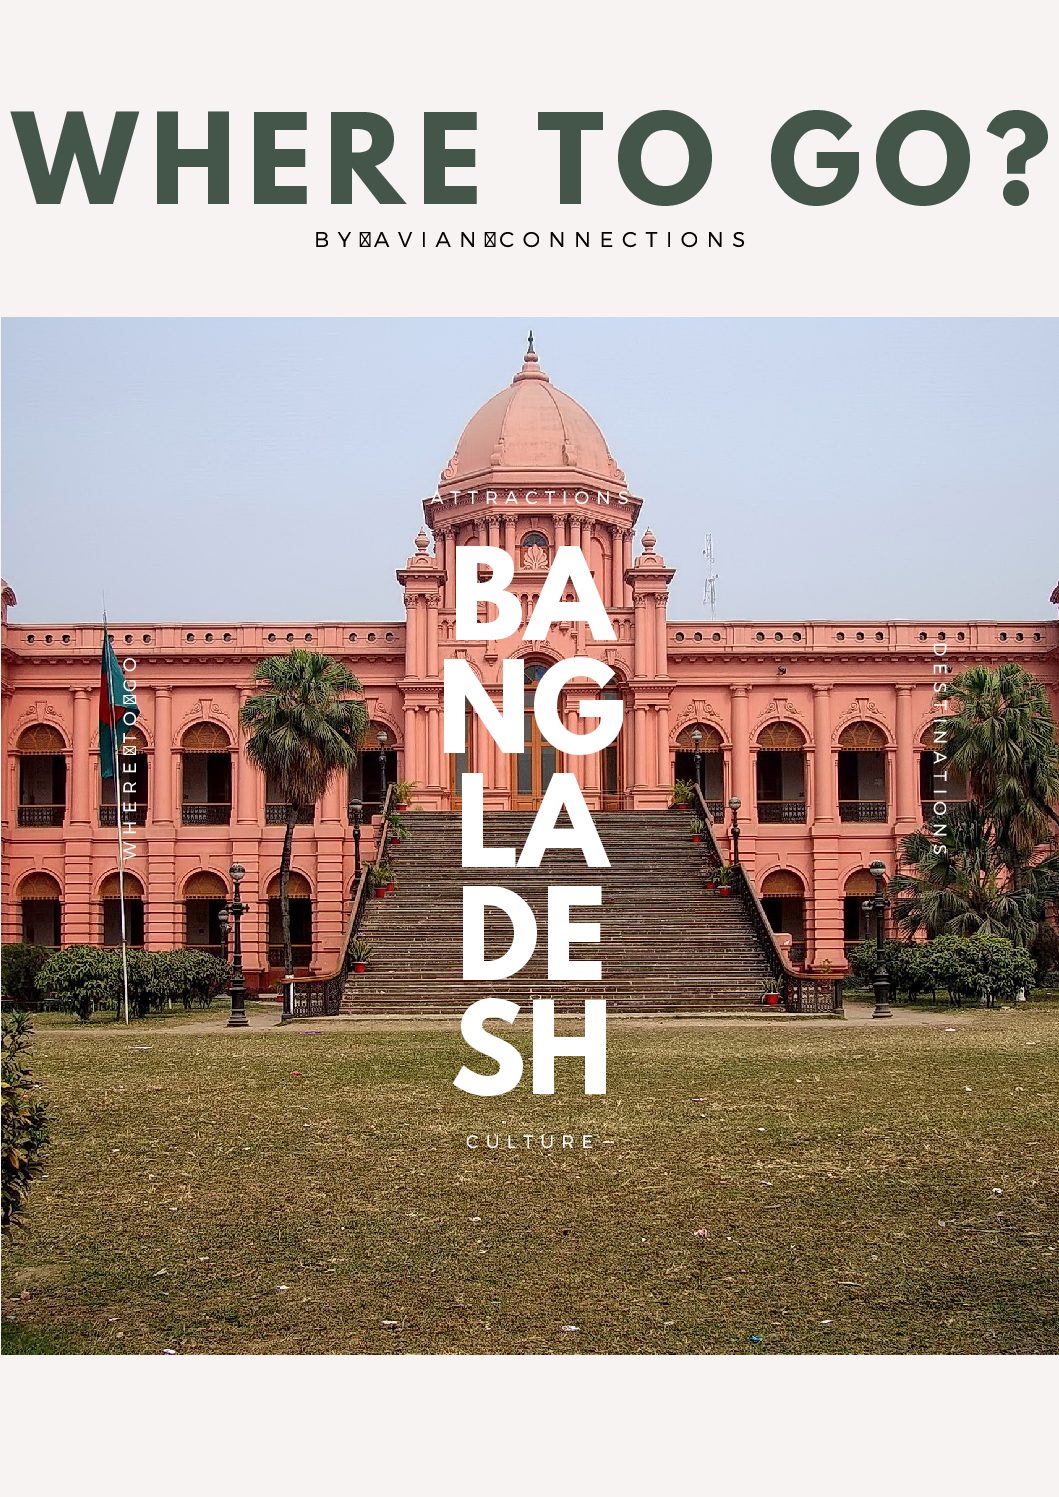 bangladesh travel book pdf